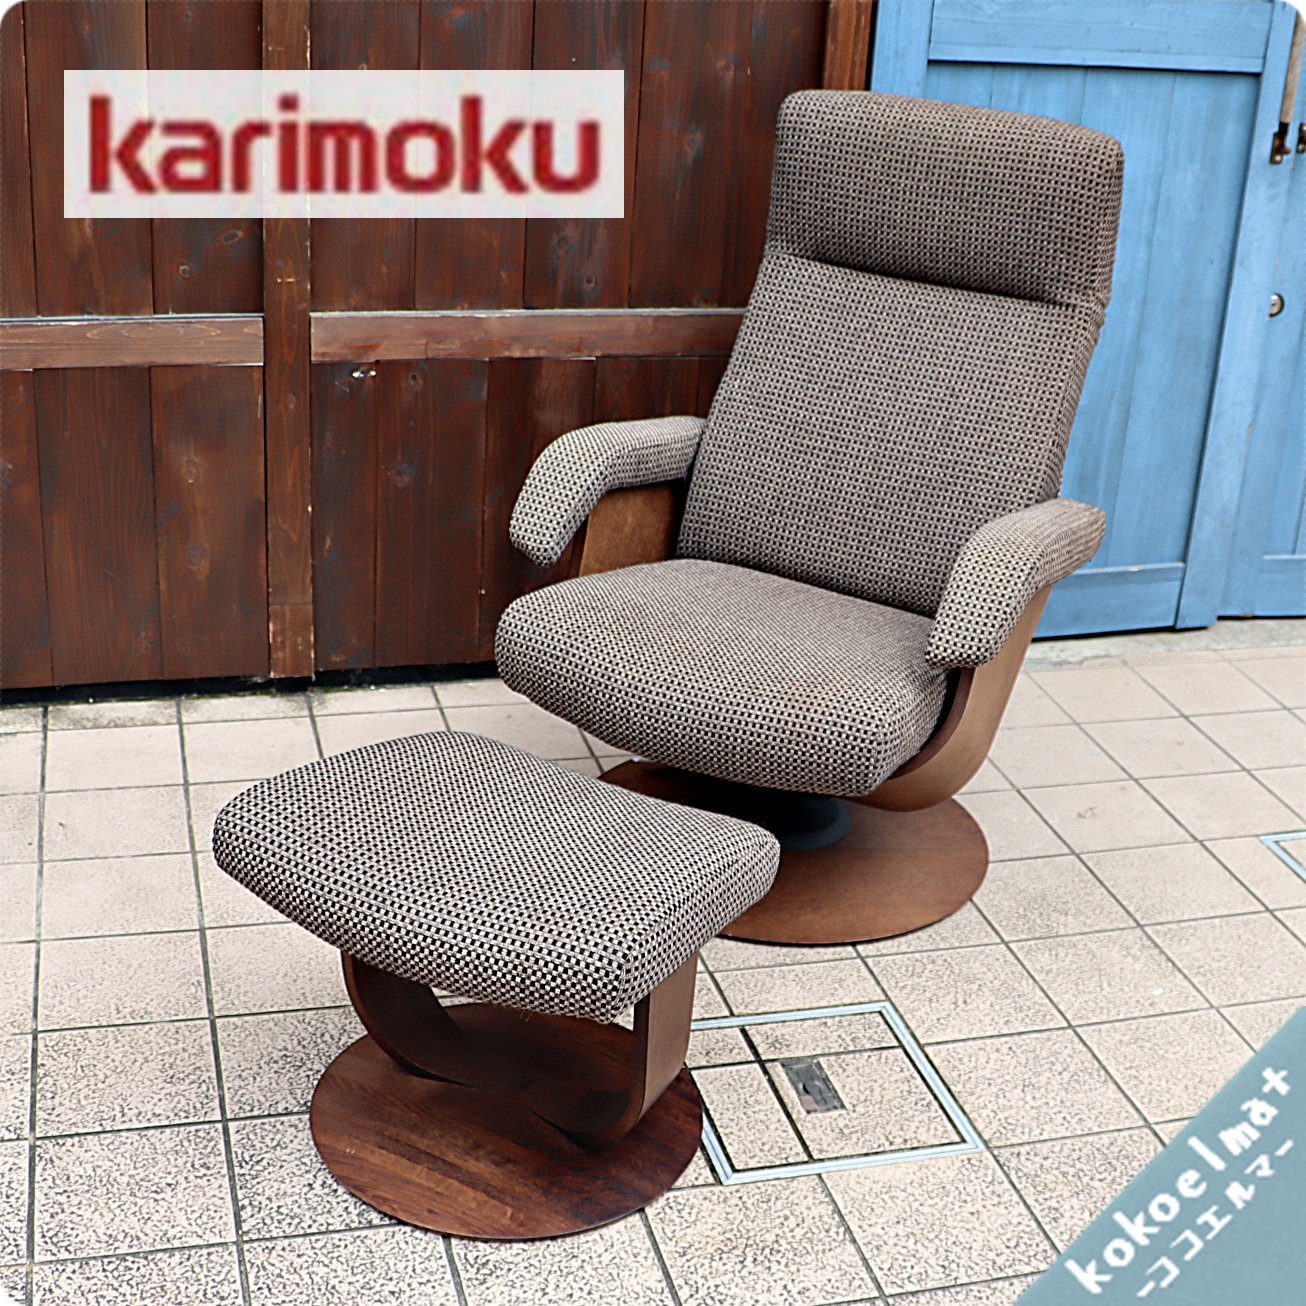 karimoku(カリモク家具)のTHE FIRST(ザ・ファースト) RU71/RU01 ...